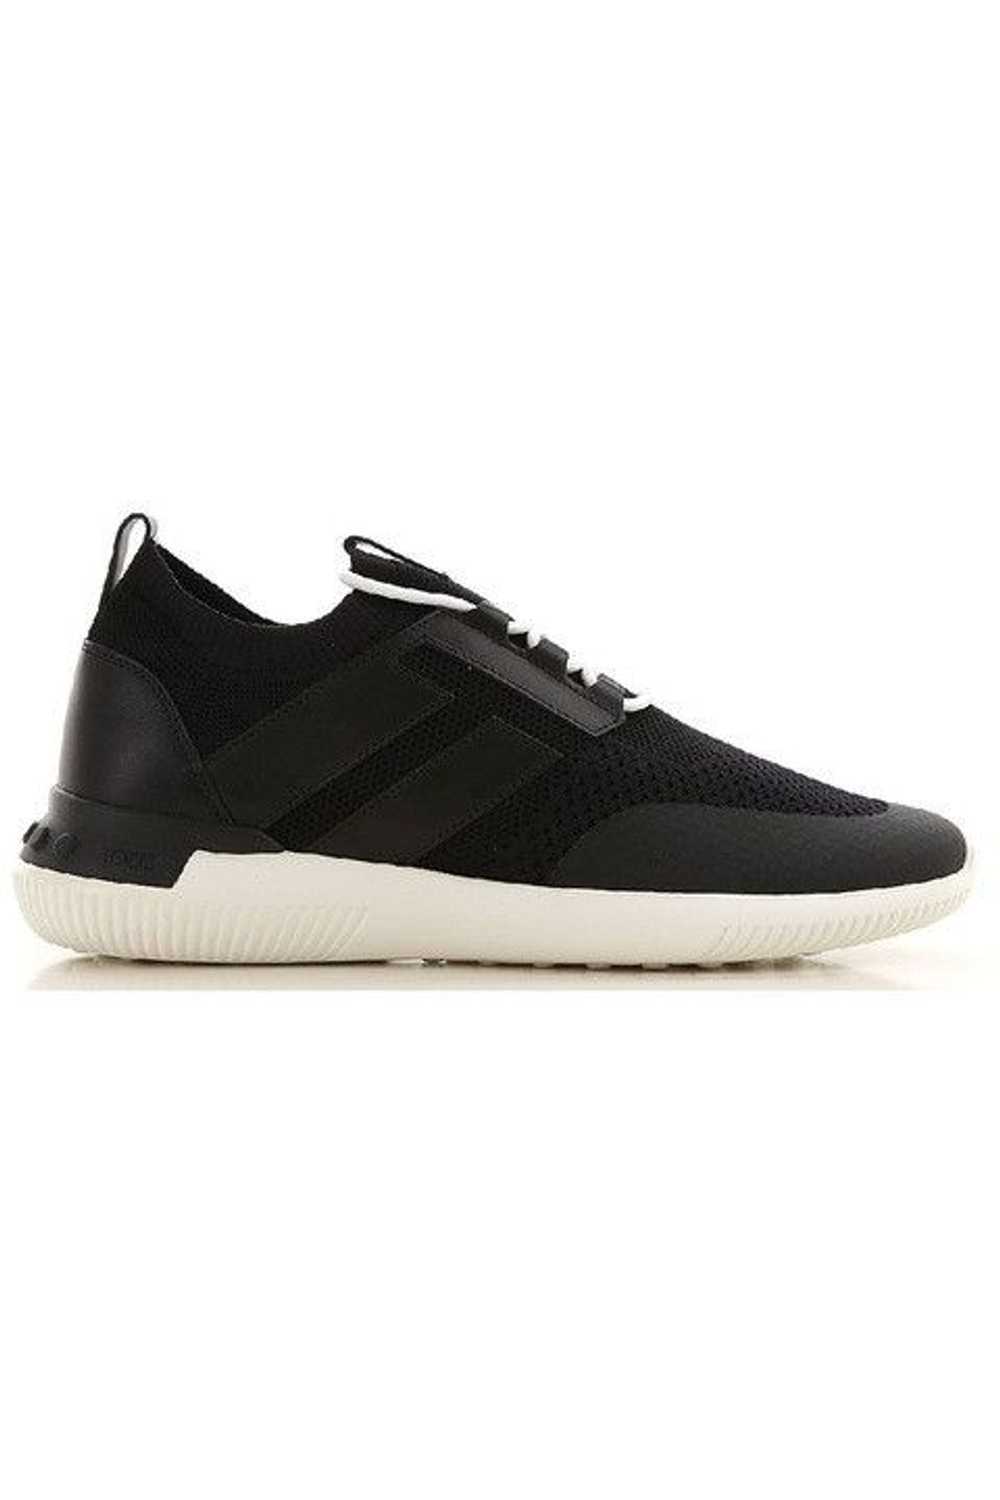 Tod's o1lxy1mk0524 Sneakers in Black & White - image 1